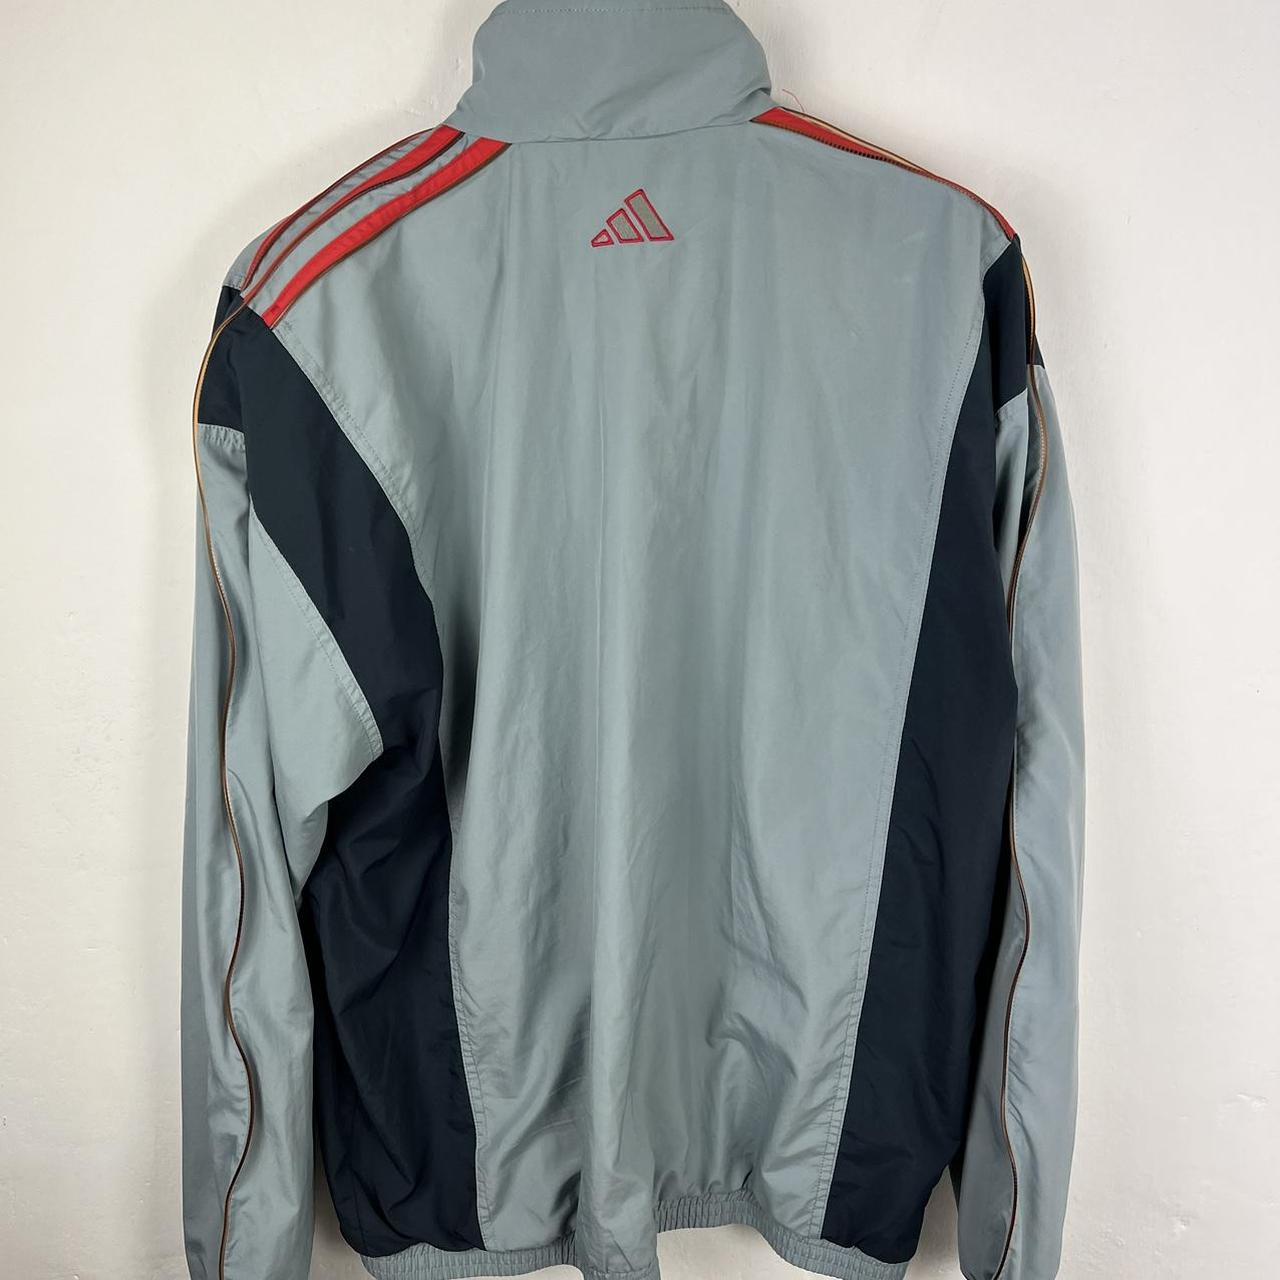 Adidas track jacket XL